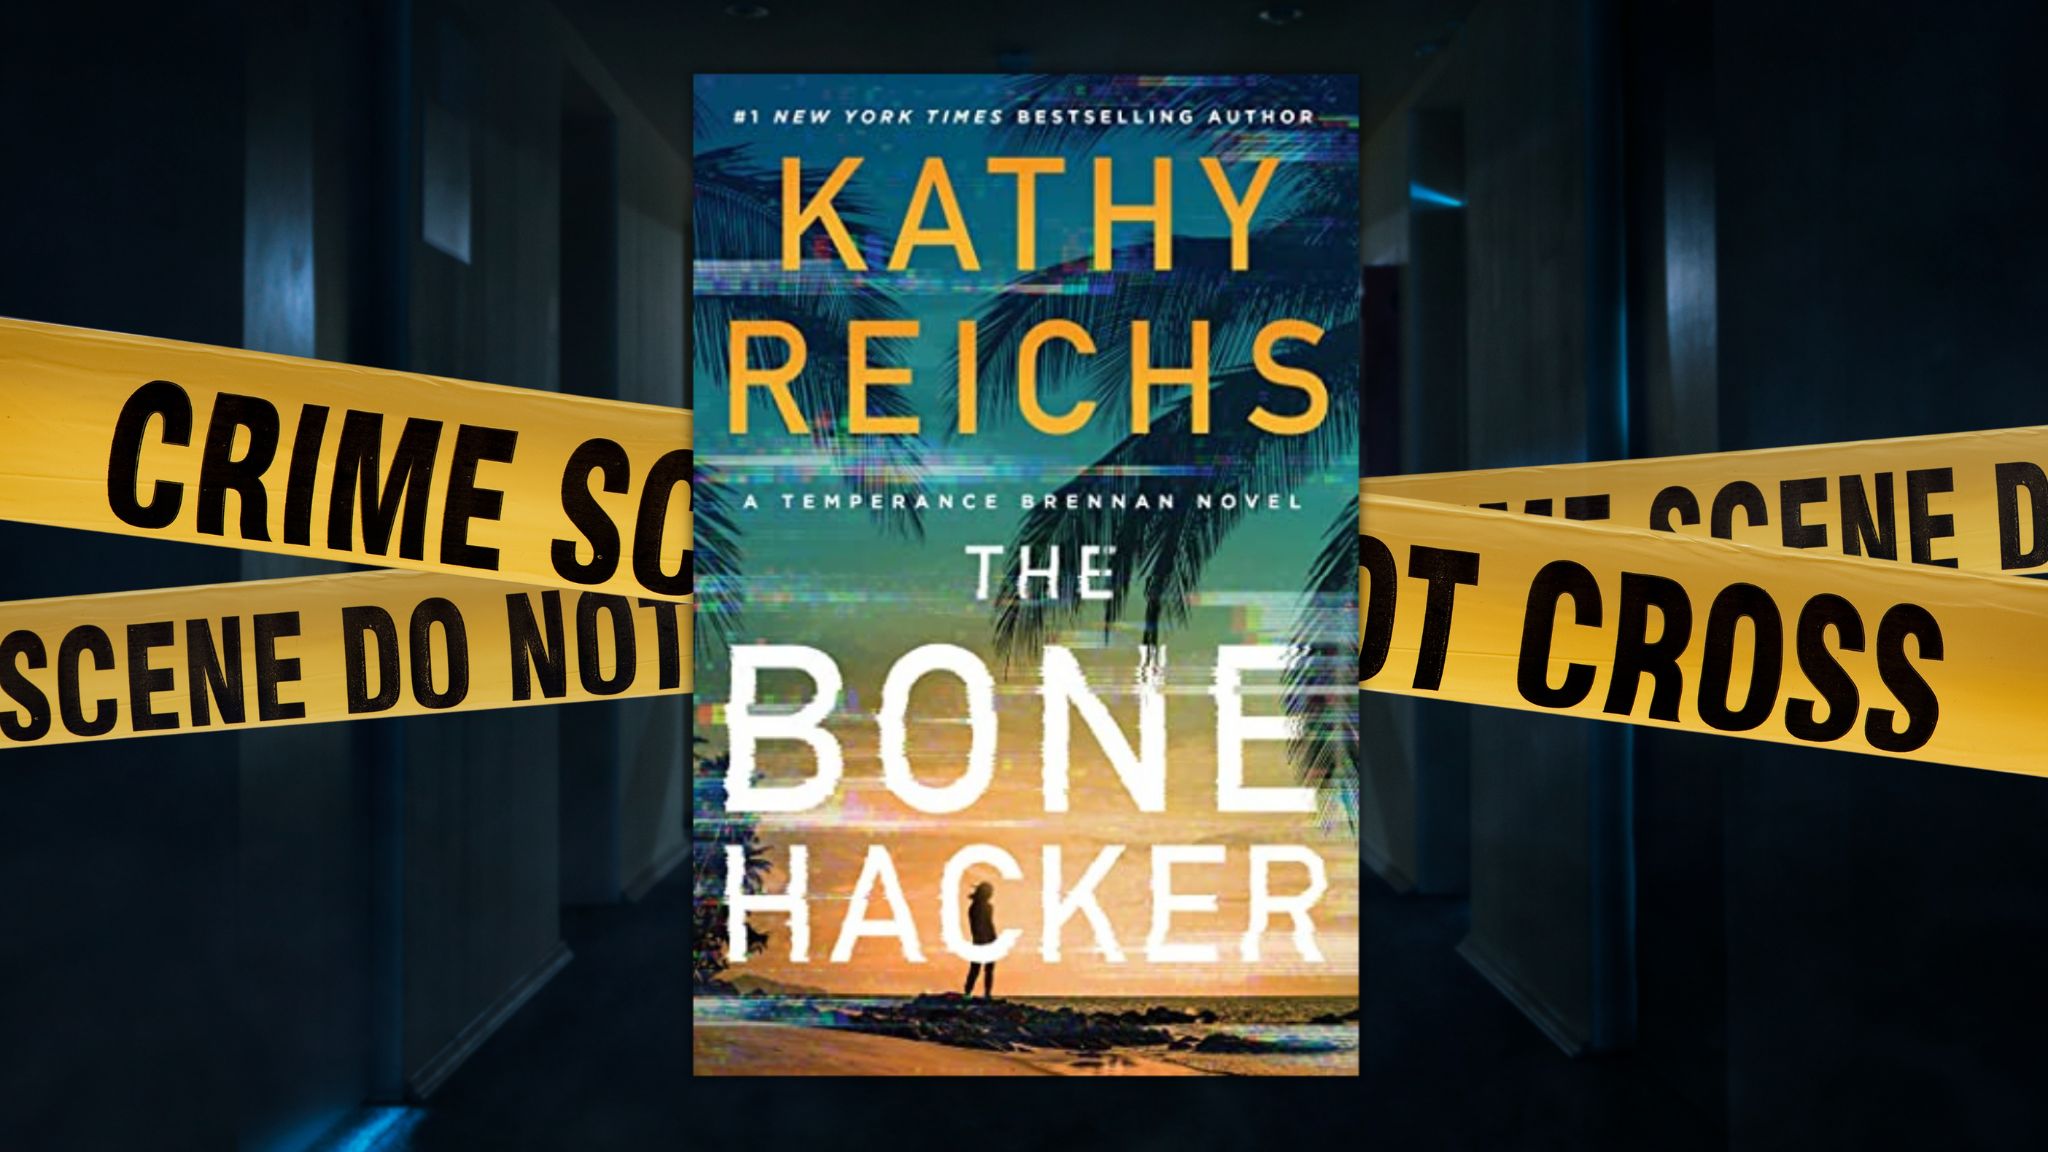 The Bone Hacker, Book by Kathy Reichs